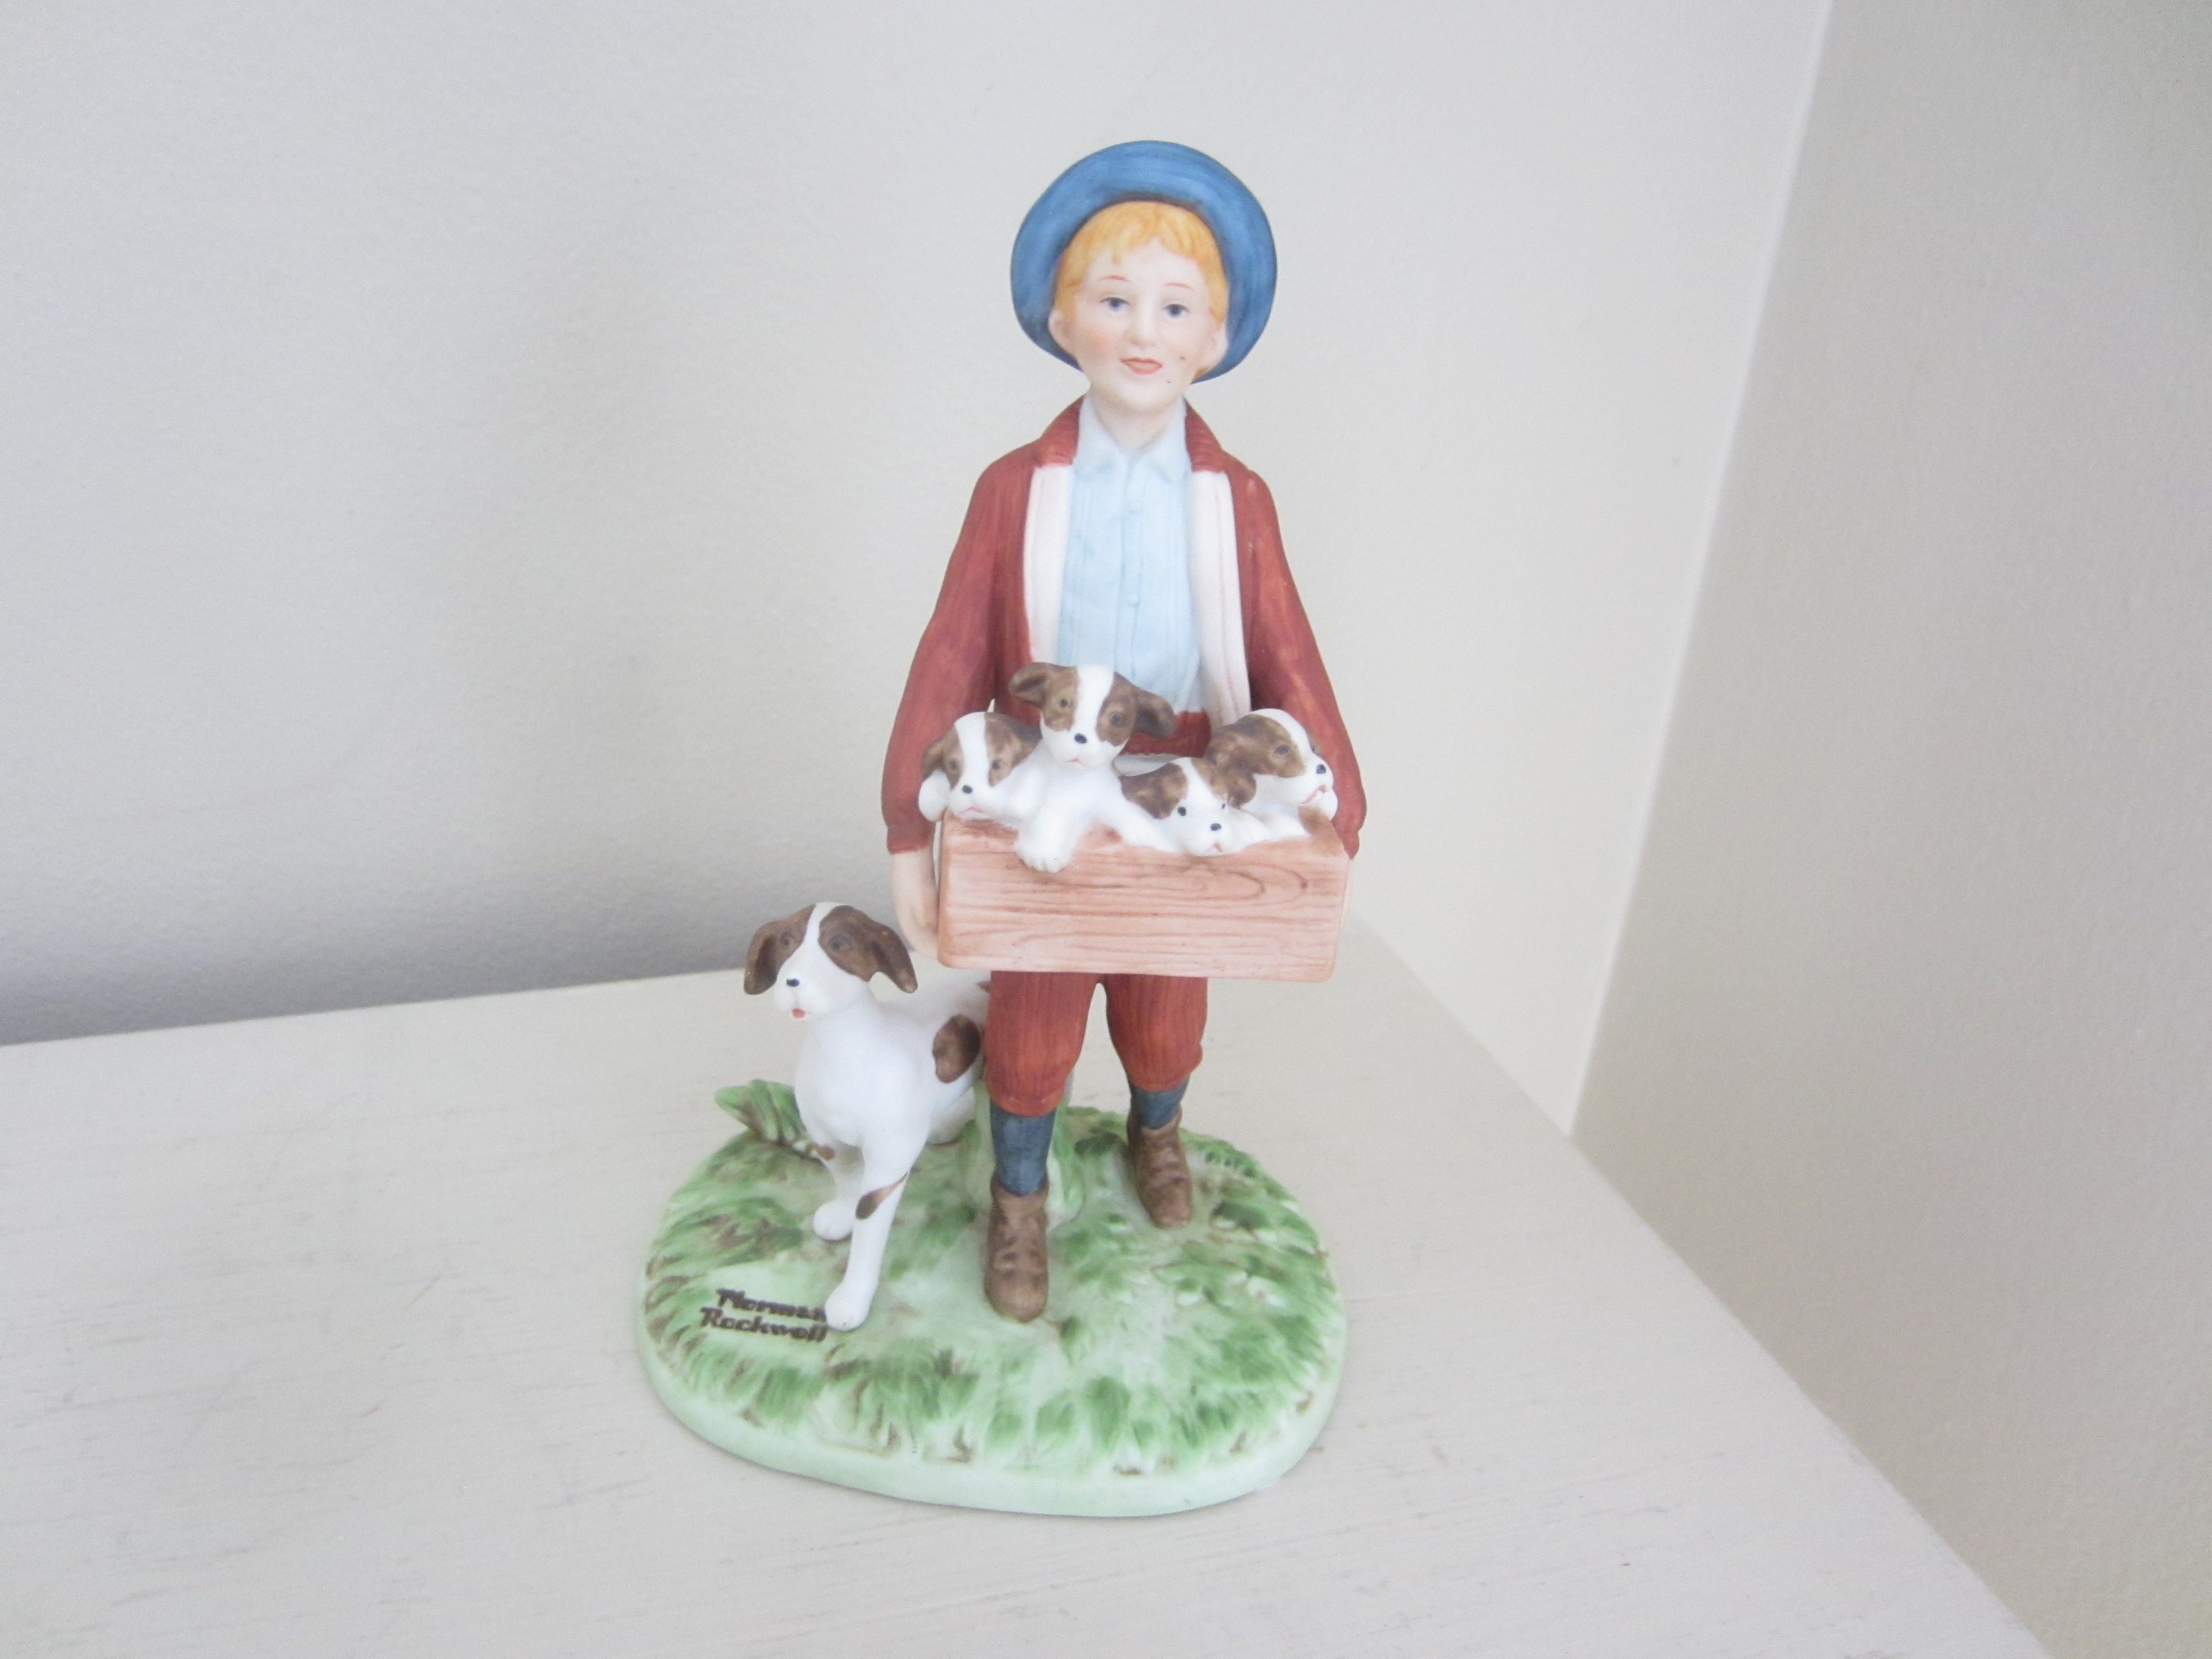 Norman Rockwell Puppy Love figurine